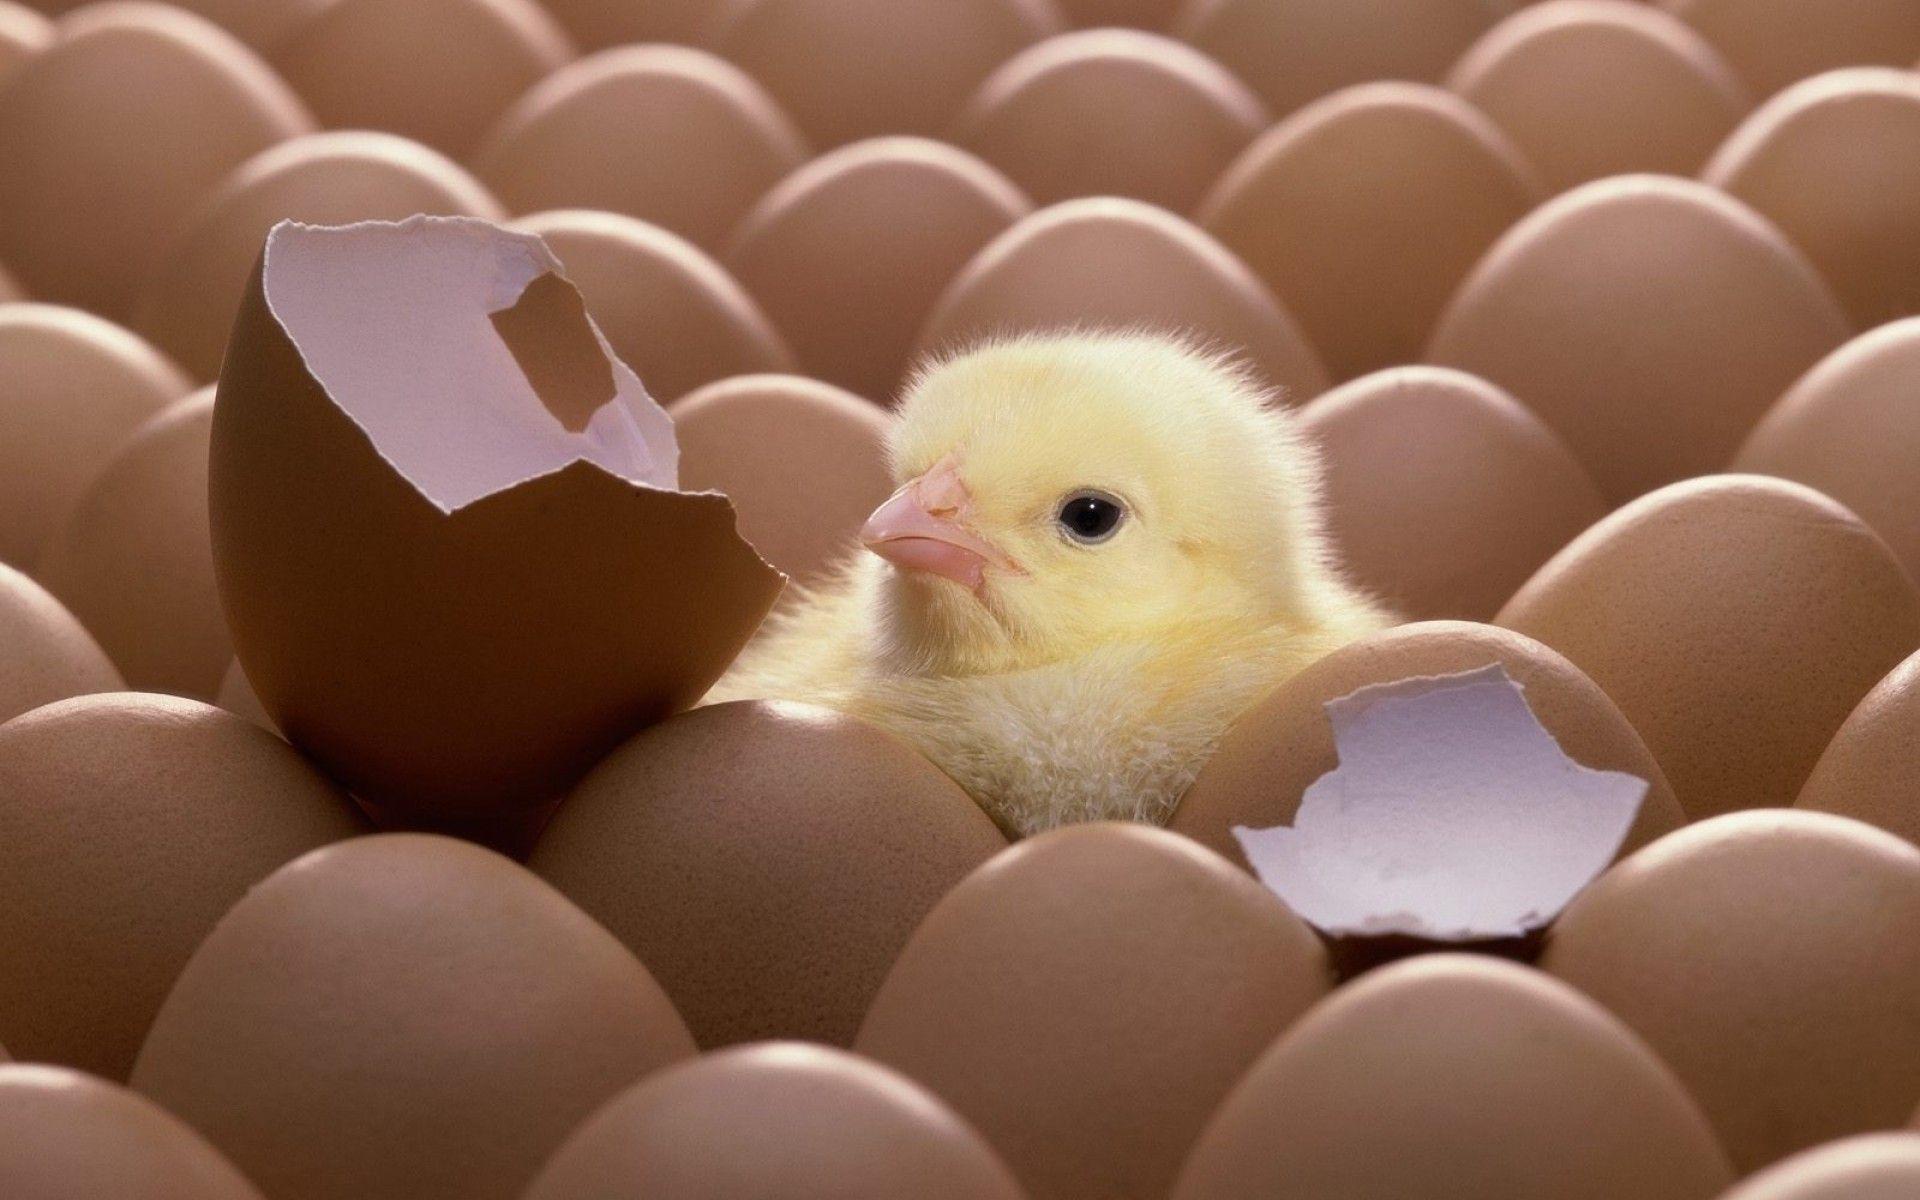 Hatching chick Wallpaper Image. HD Wallpaper Image